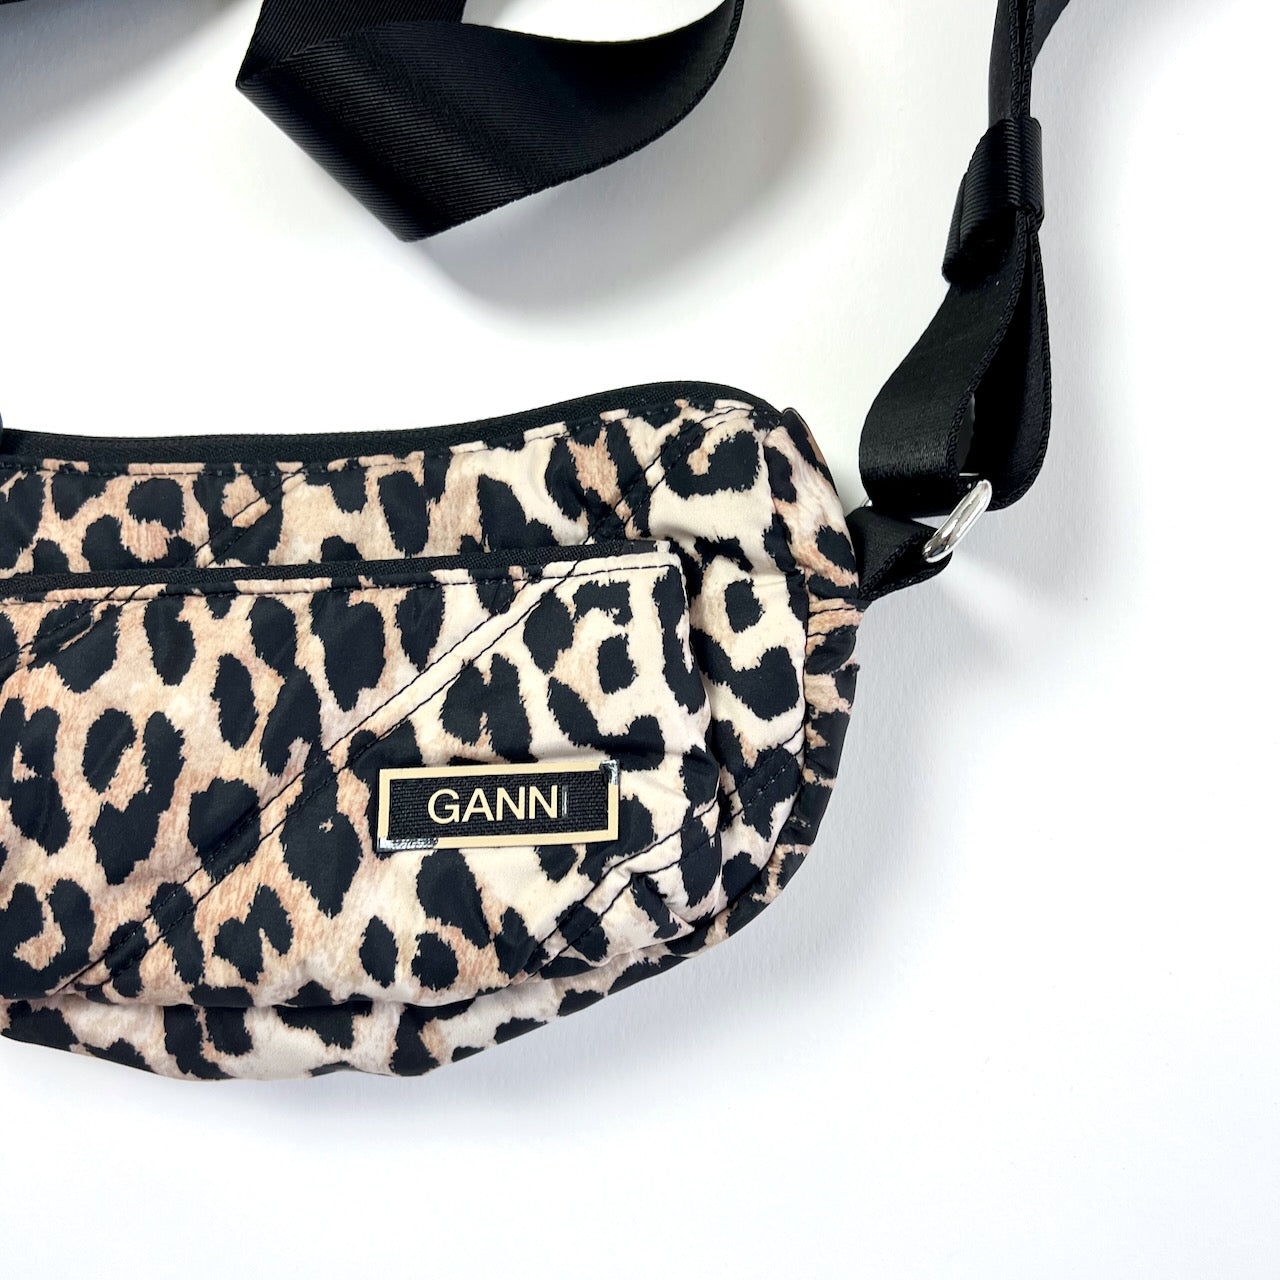 Ganni quilted leopard print baguette bag at Manifesto Woman